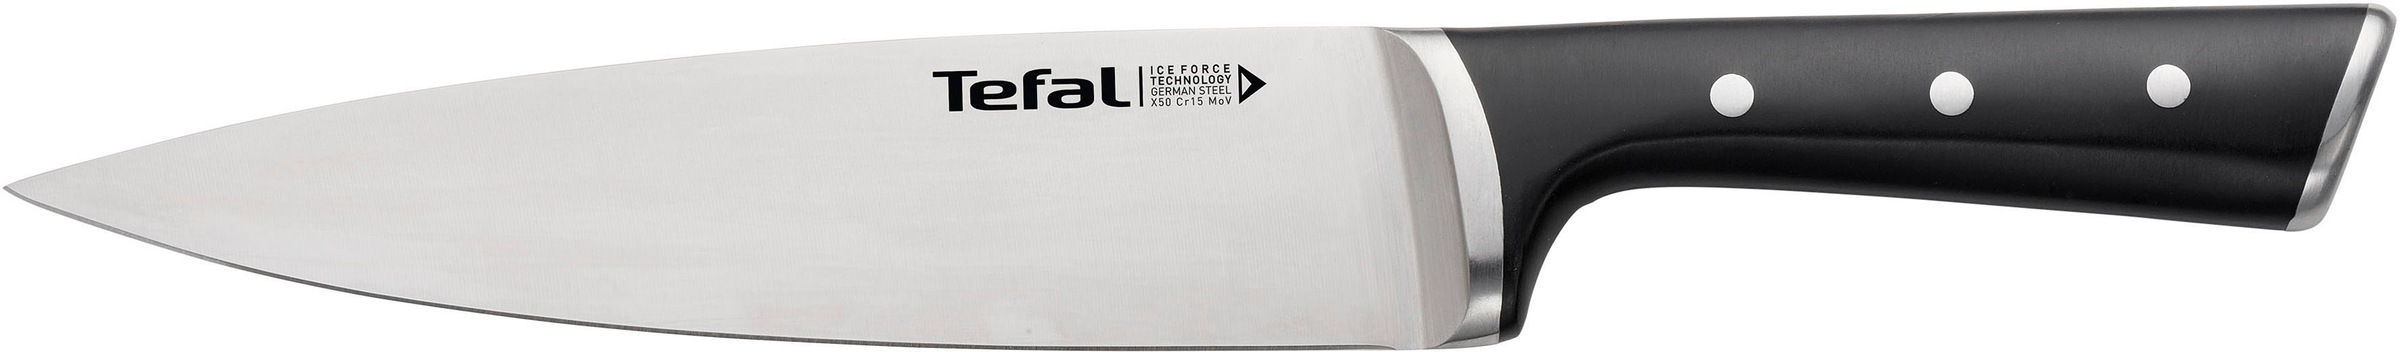 Tefal Pfannen-Set »Unlimited Ice Force«, Aluminium, (Set, 5 tlg., je 1 Pfanne Ø 24/28 cm, Wok Ø 28 cm, Kochmesser, Bratwender), kratzfeste Antihaftversiegelung, Thermo-Signal, inkl. Zubehör